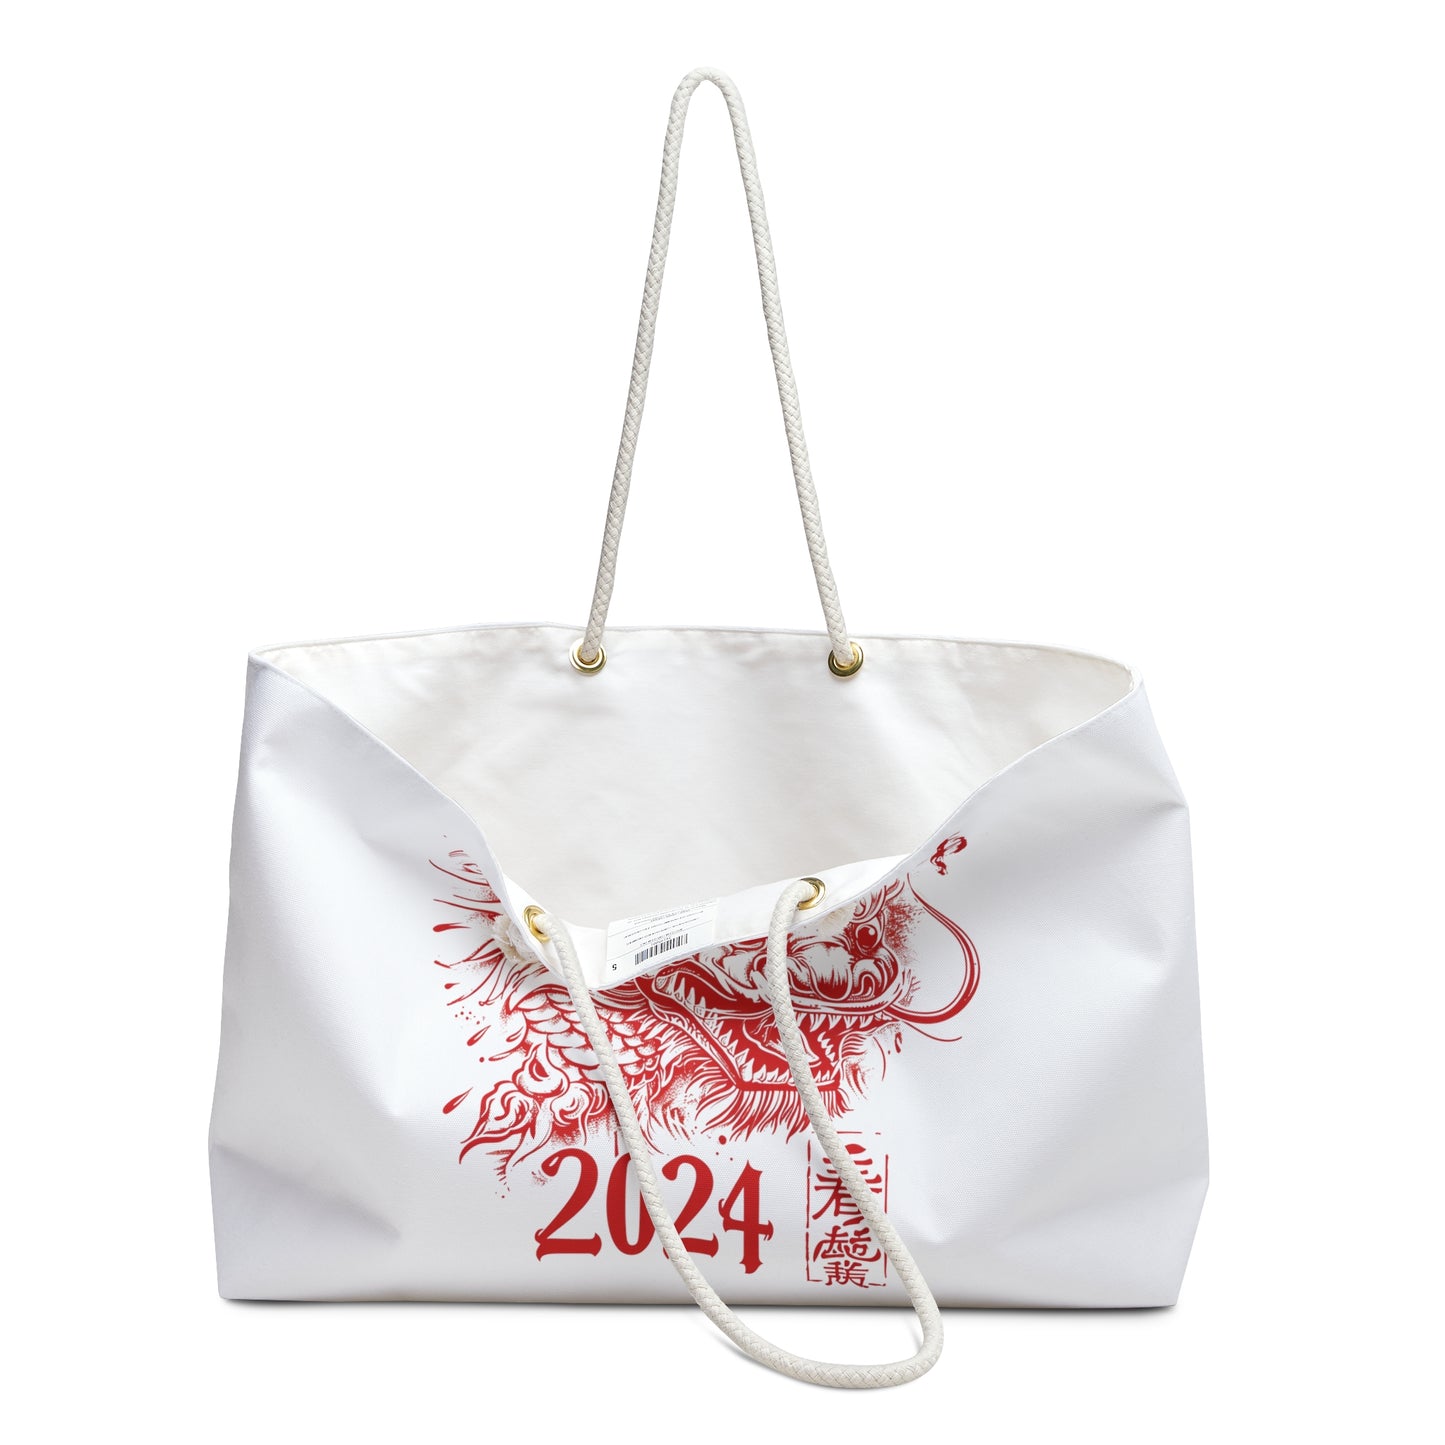 InterPETation 2024 Chinese New Year Weekender Bag